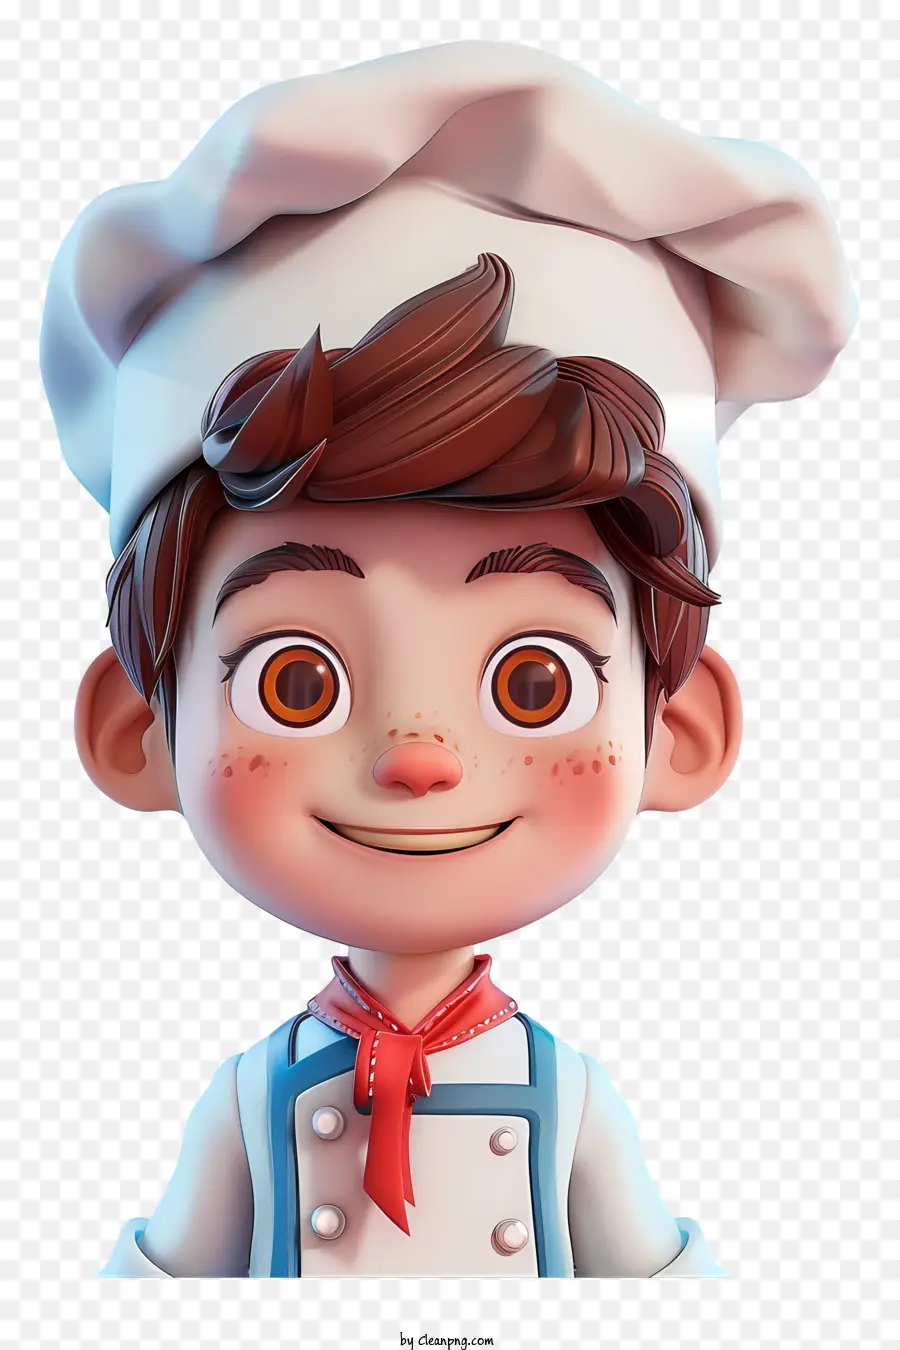 cartoon chef child chef baking tray apron chef's hat